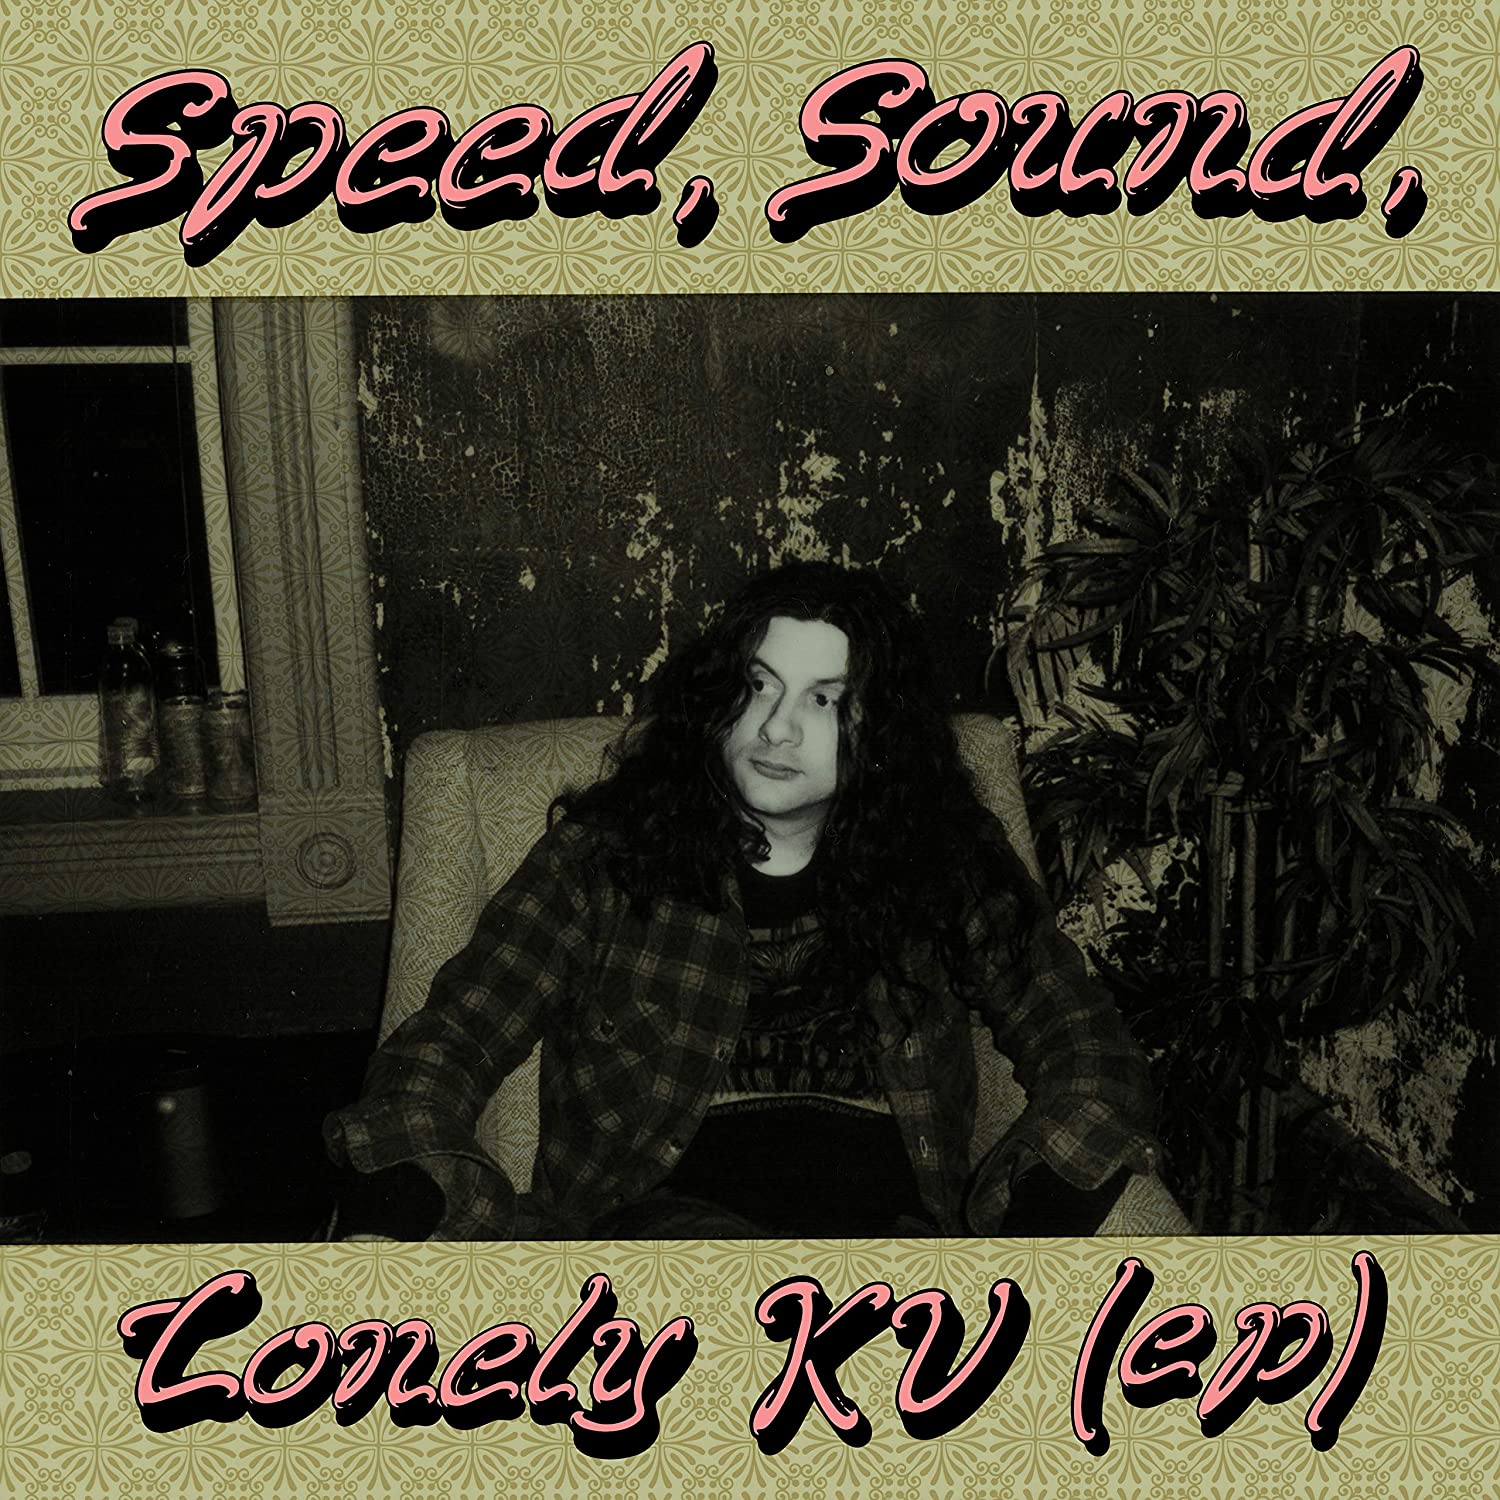 Kurt Vile "Speed, sound, lonely KV" EP